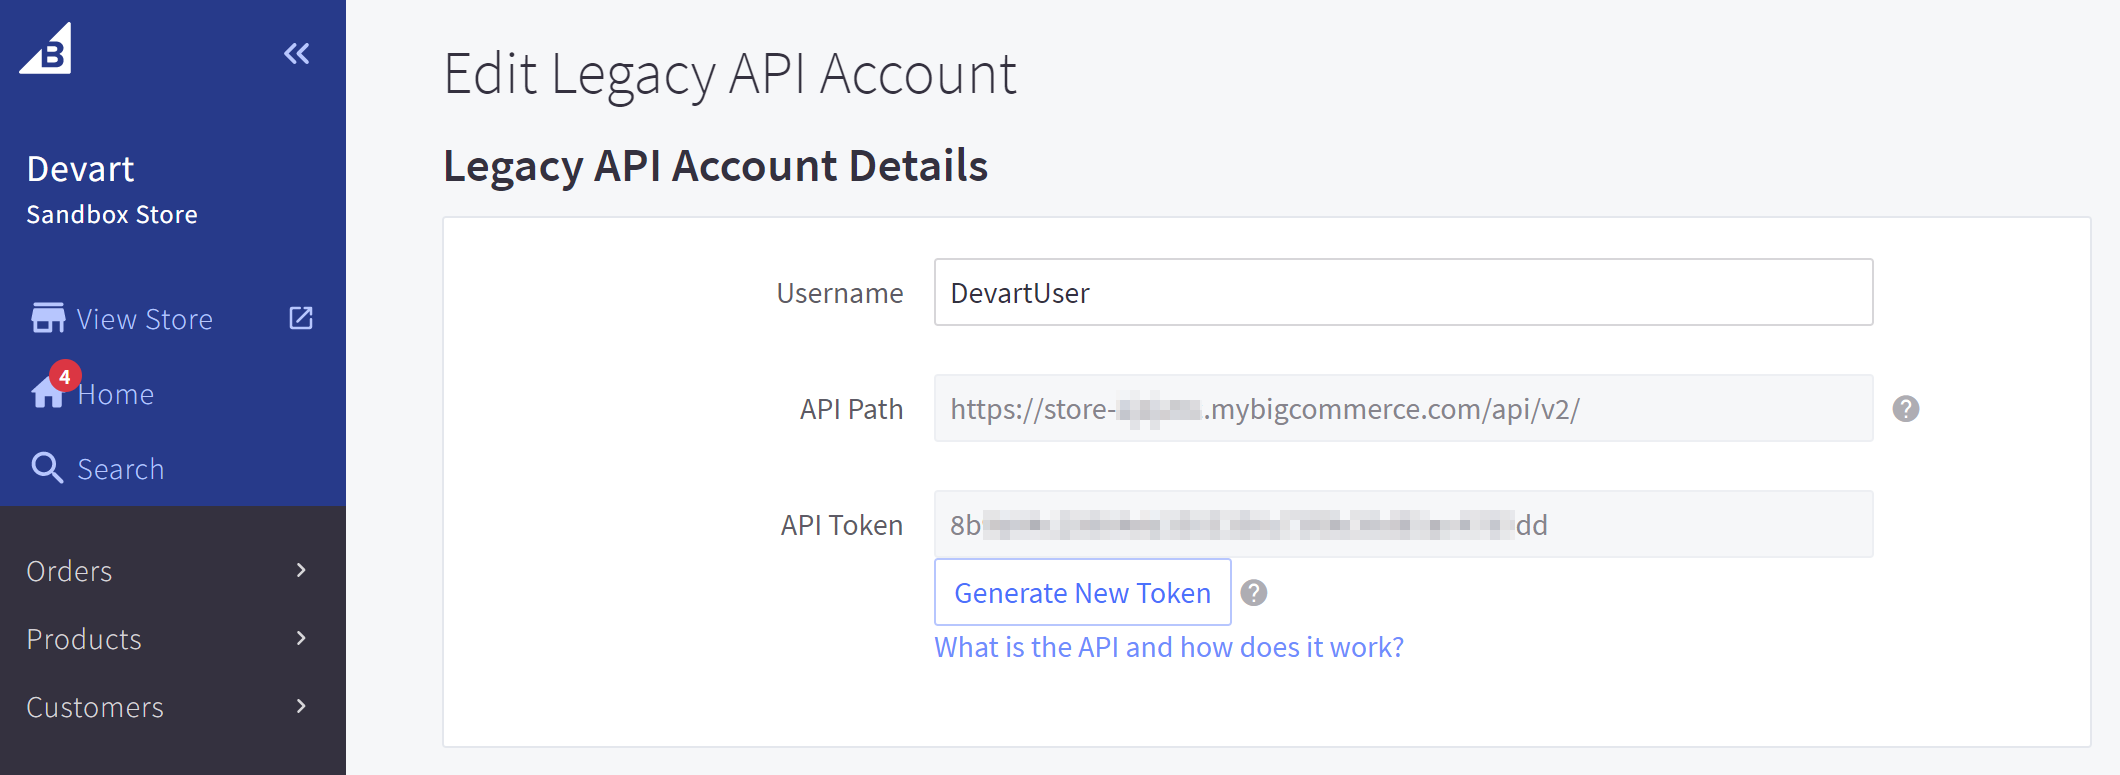 Legacy API Account Details